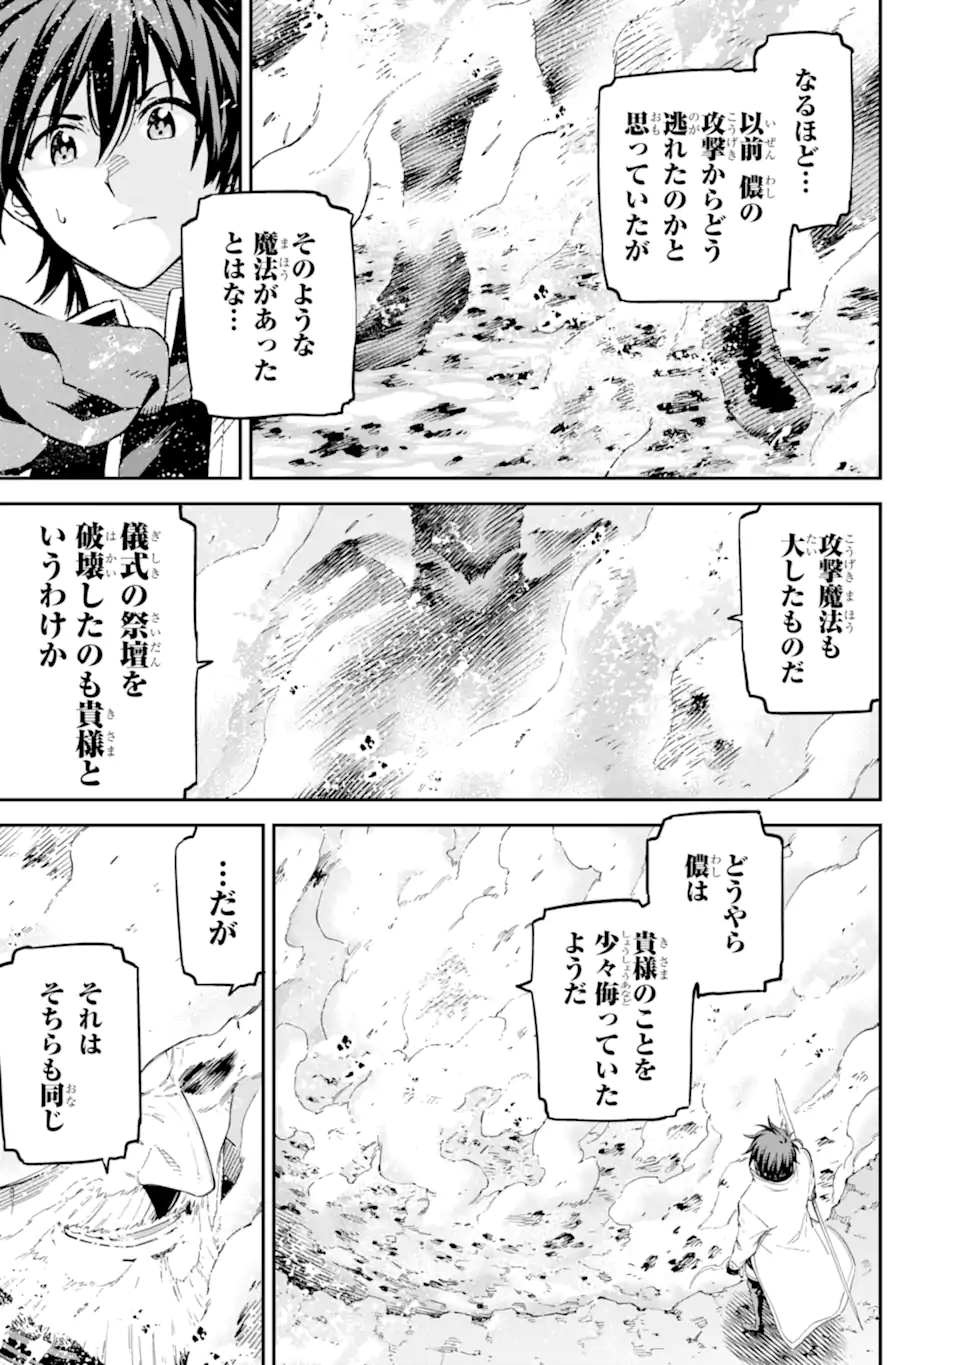 Isekai Kenja no Tensei Musou ~Geemu no Chishiki de Isekai Saikyou~ - Chapter 35.3 - Page 2